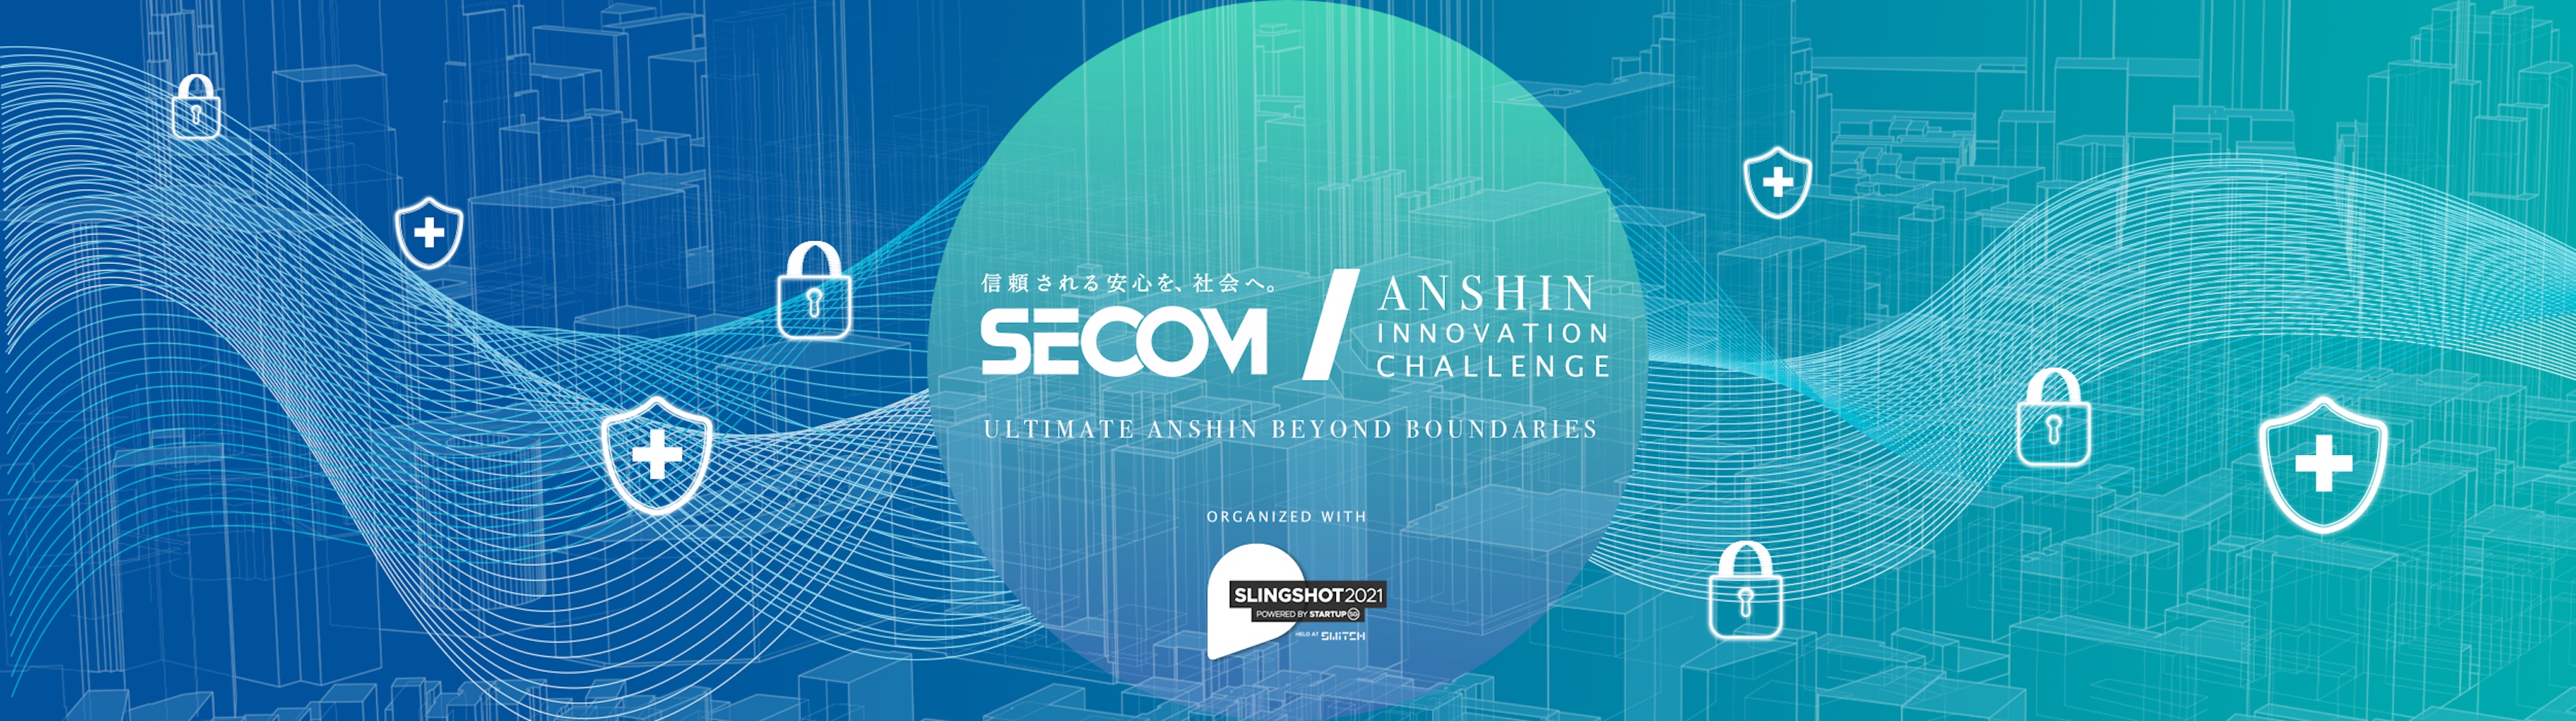 SECOM ANSHIN Innovation Challenge